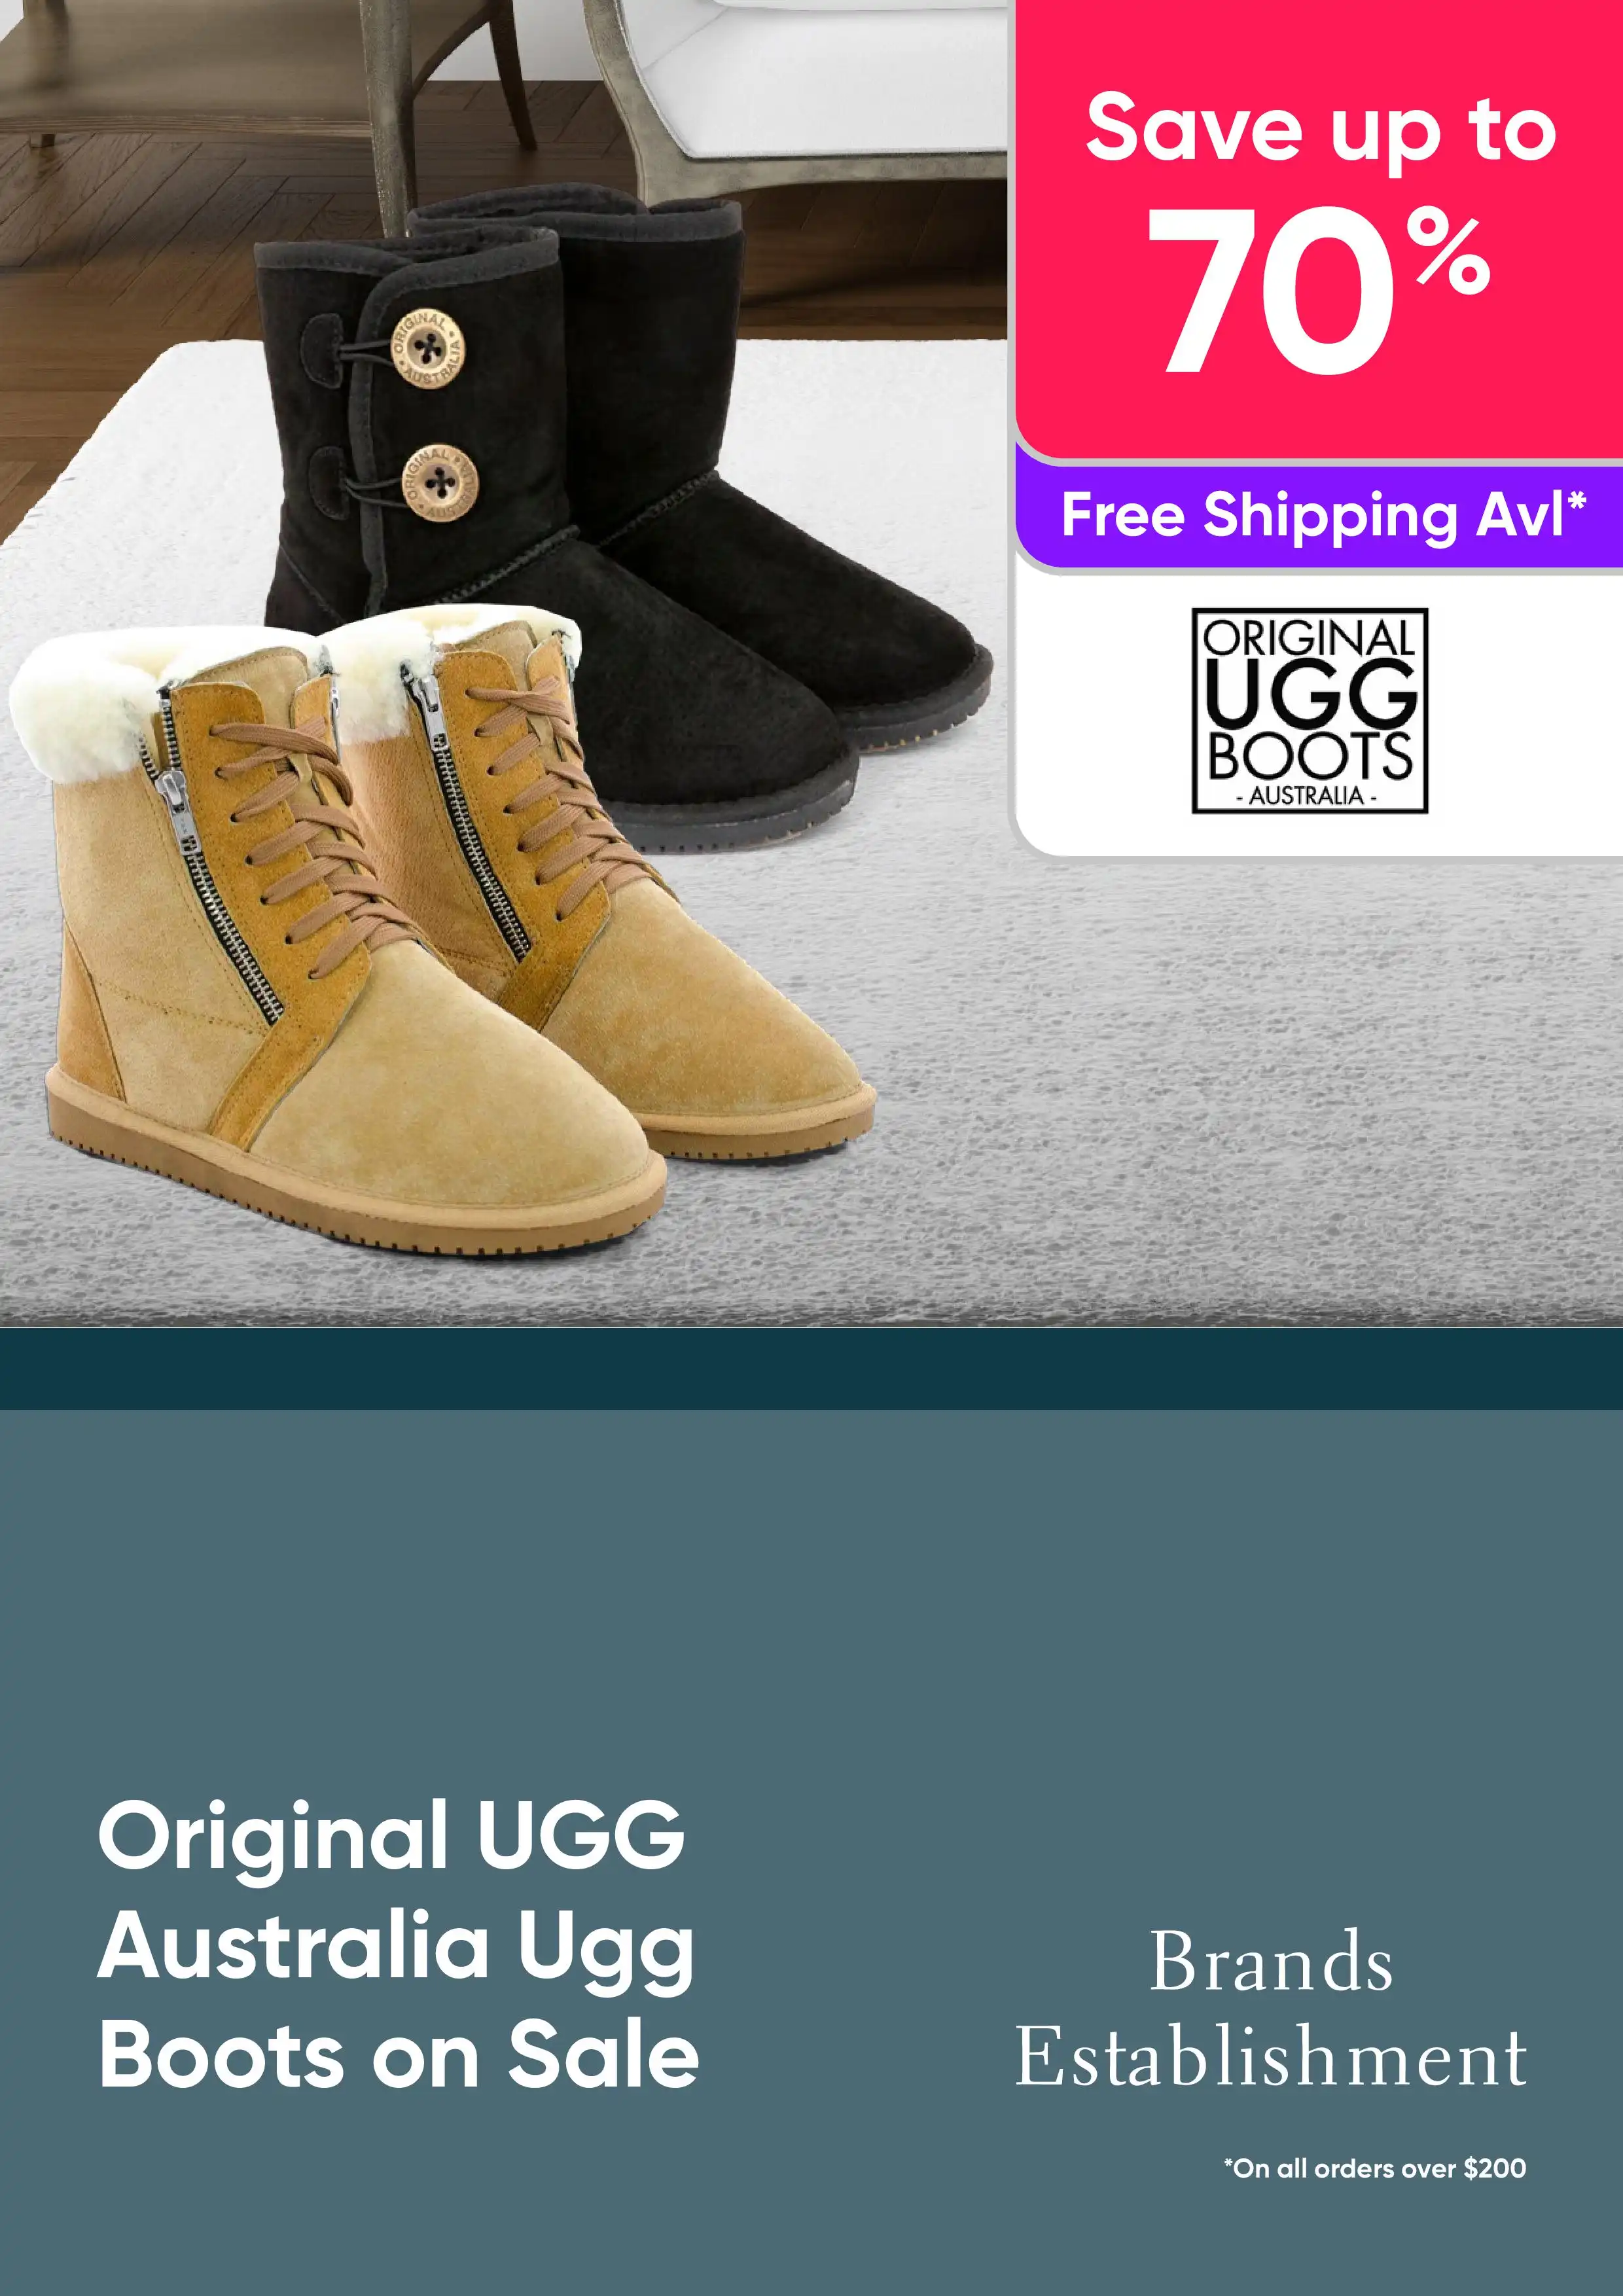 Original UGG Australia Ugg Boots on Sale - Save Up to 70% Off RRPs